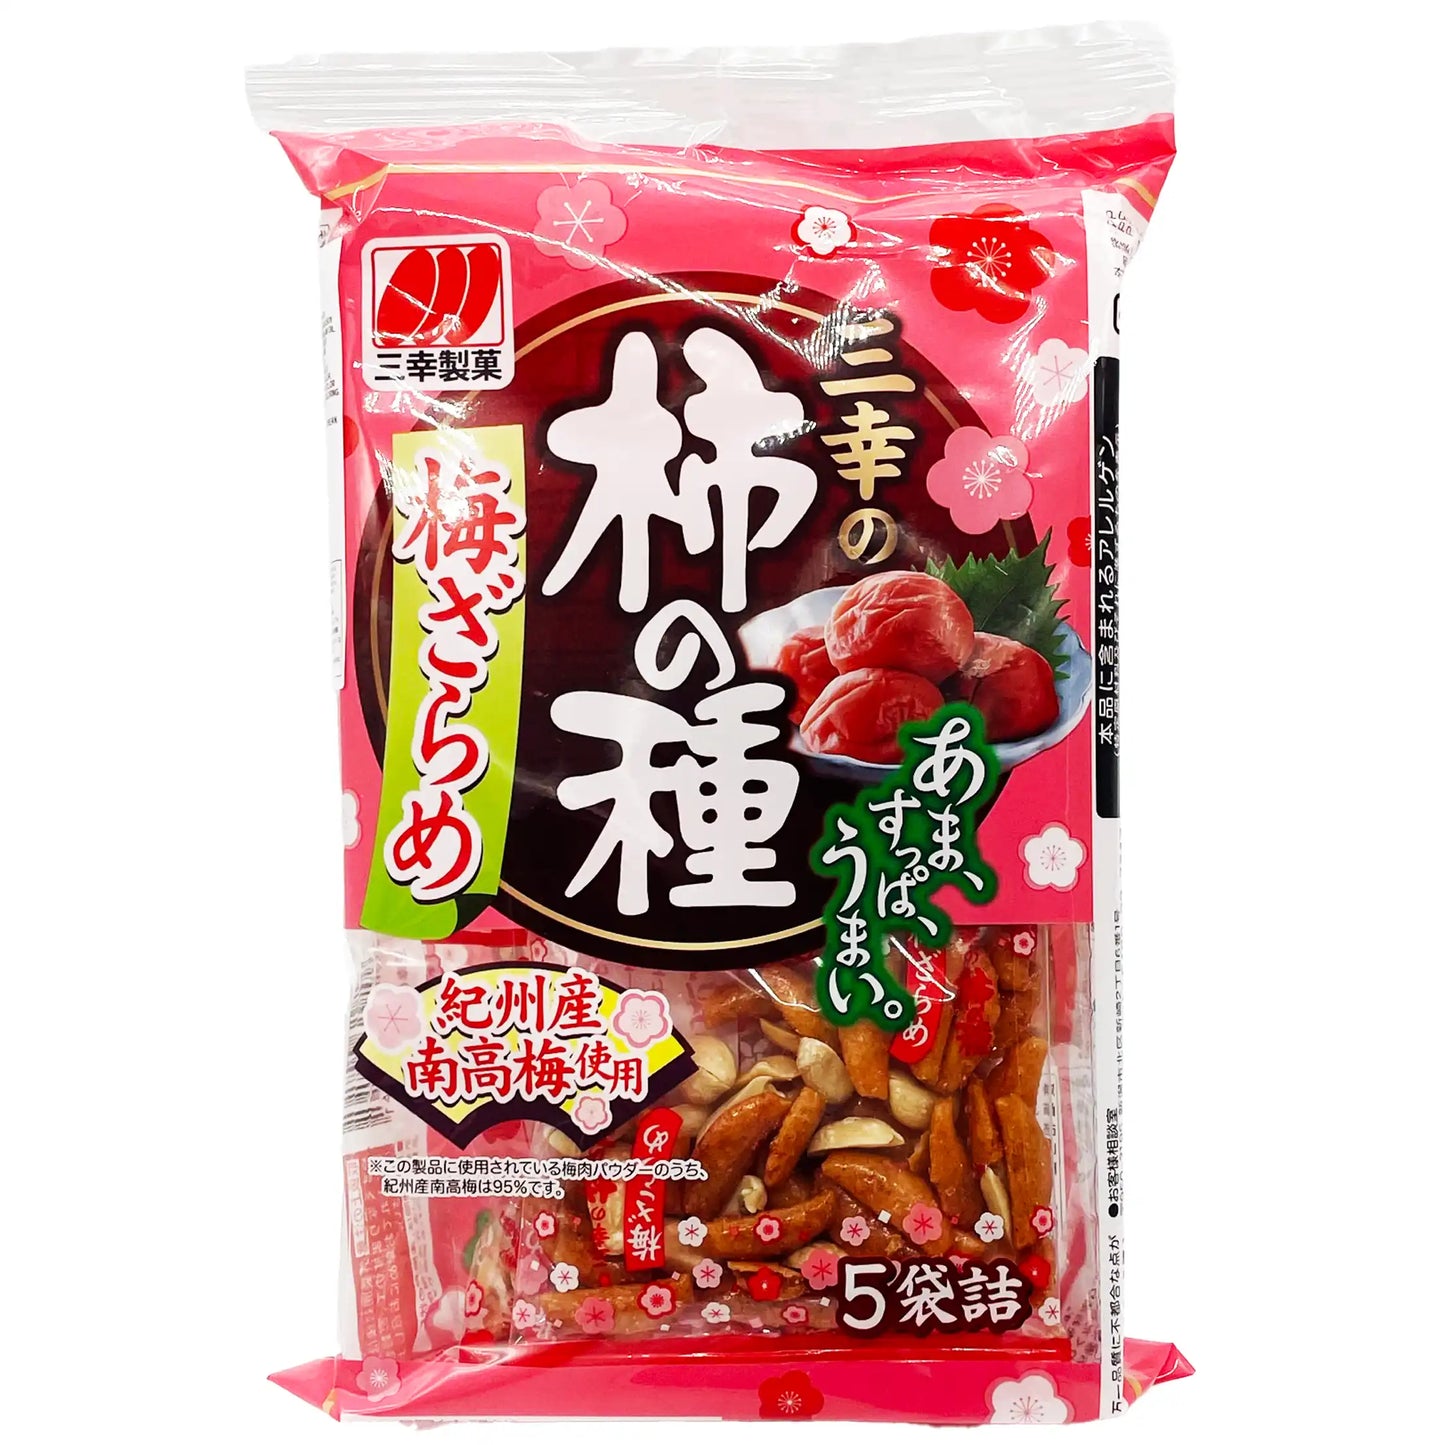 Sanko Kaki No Tane Ume Flavor Rice Cracker with Peanuts 3.88 oz